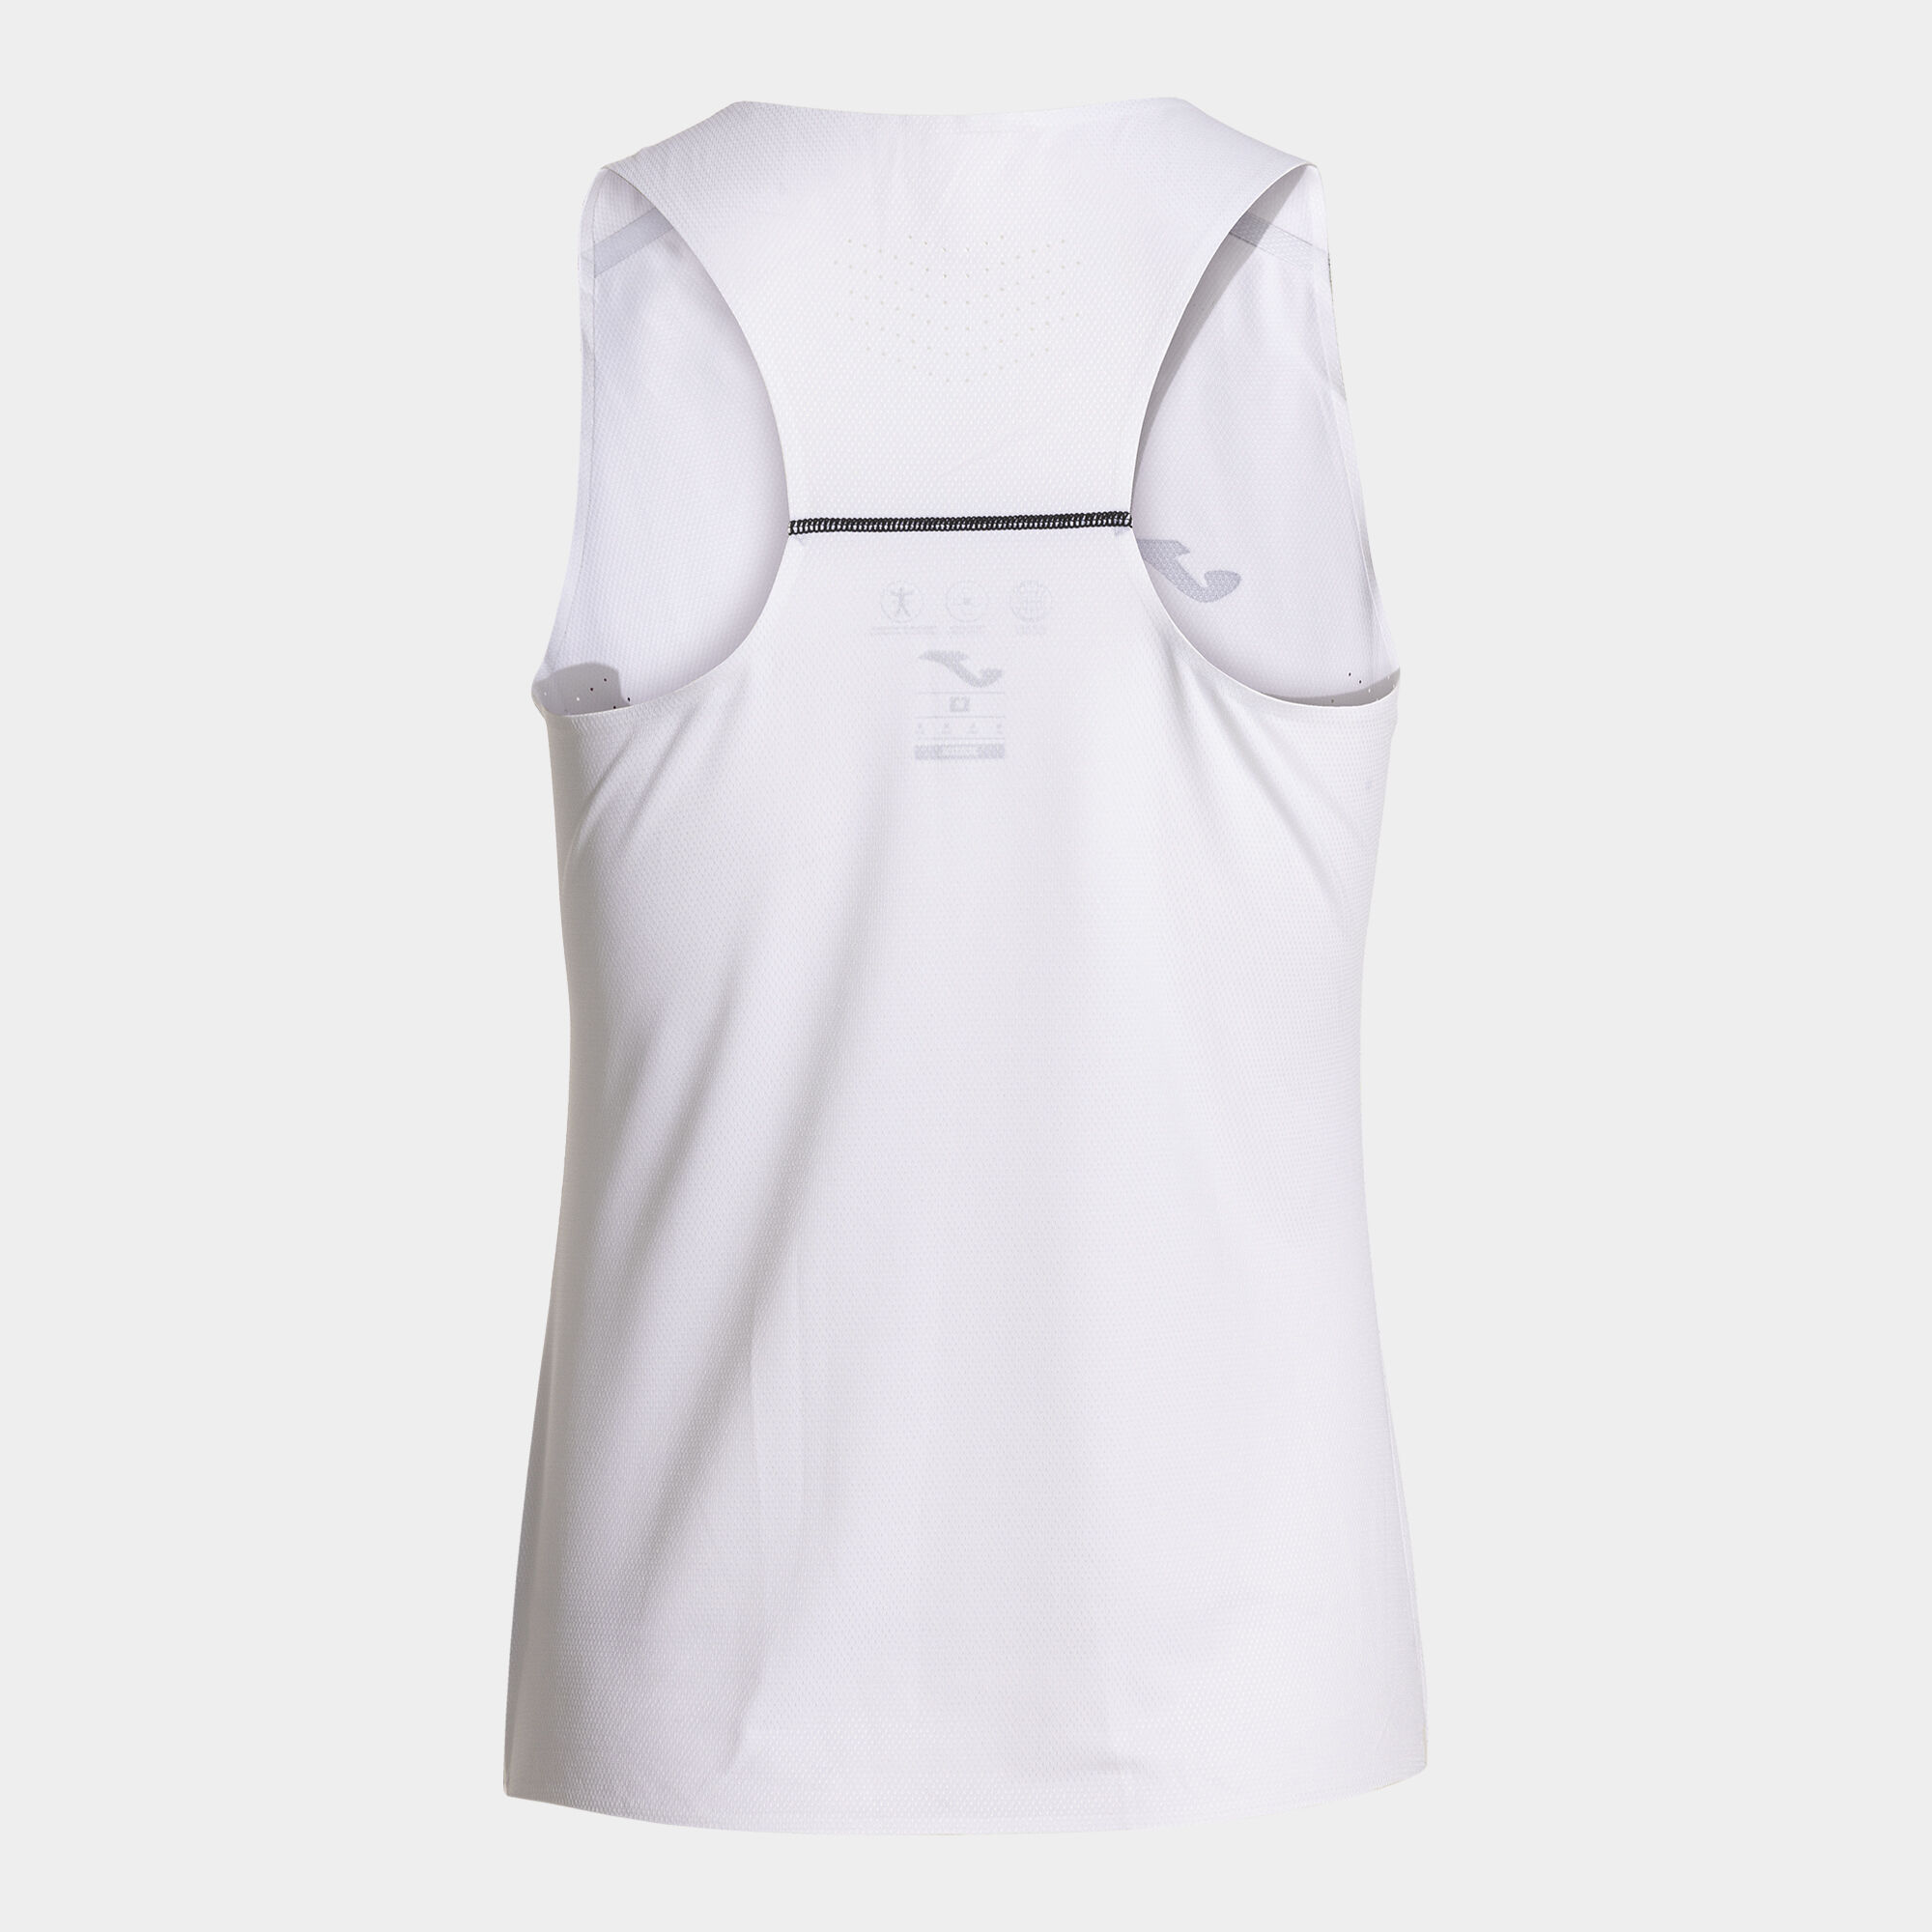 Camiseta tirantes mujer Ranking blanco